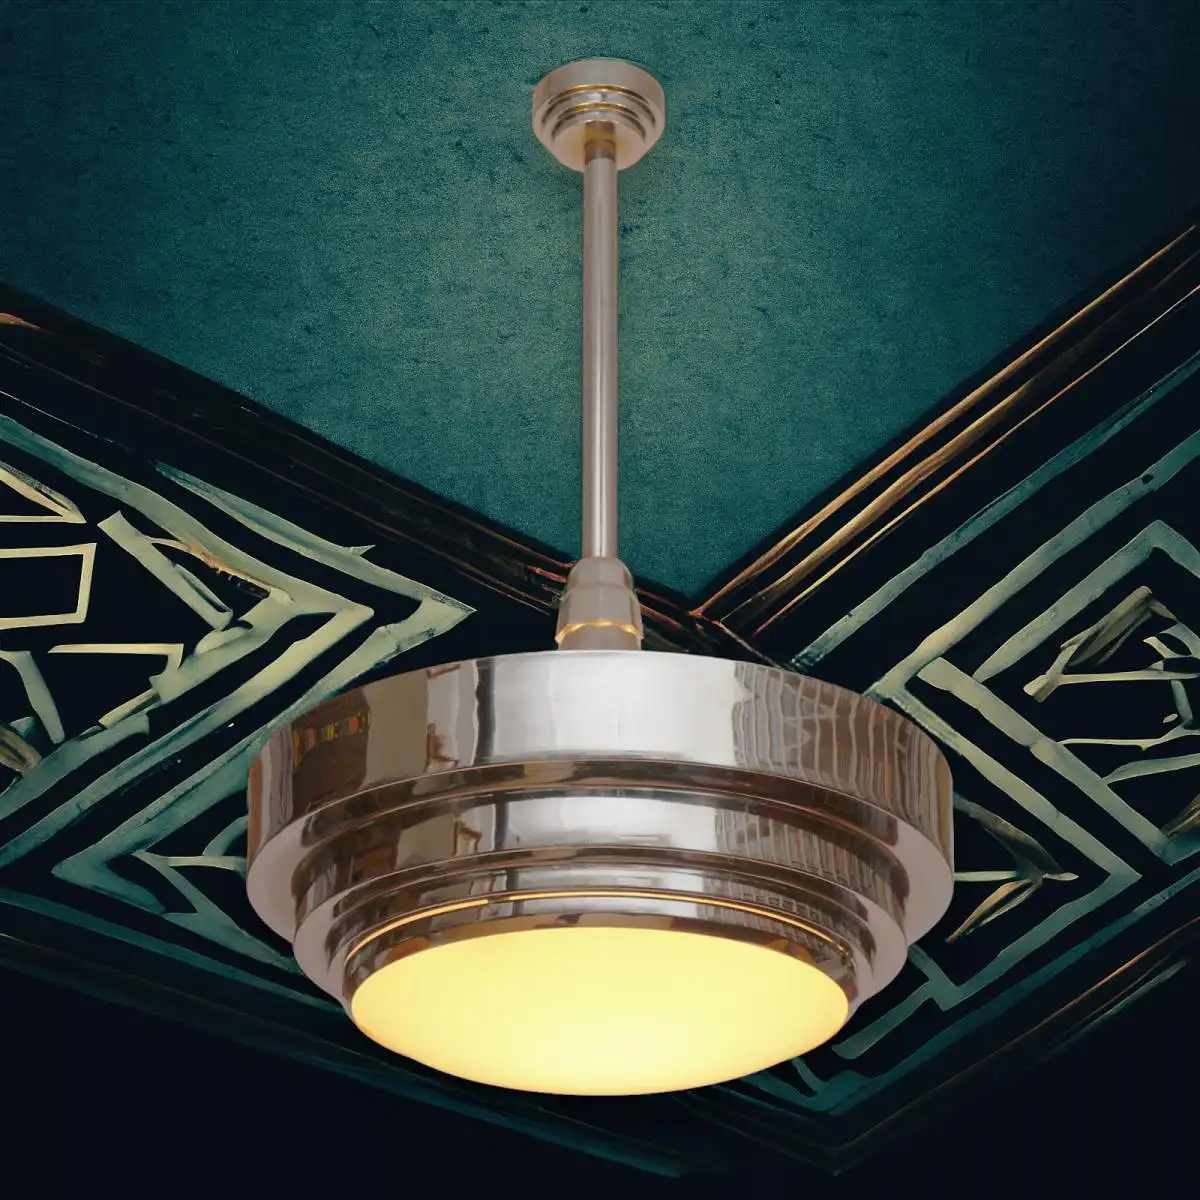 Lampe suspendue Art Deco "EMPIRE" au plafond 1930 Chrome RAR lampe sign.